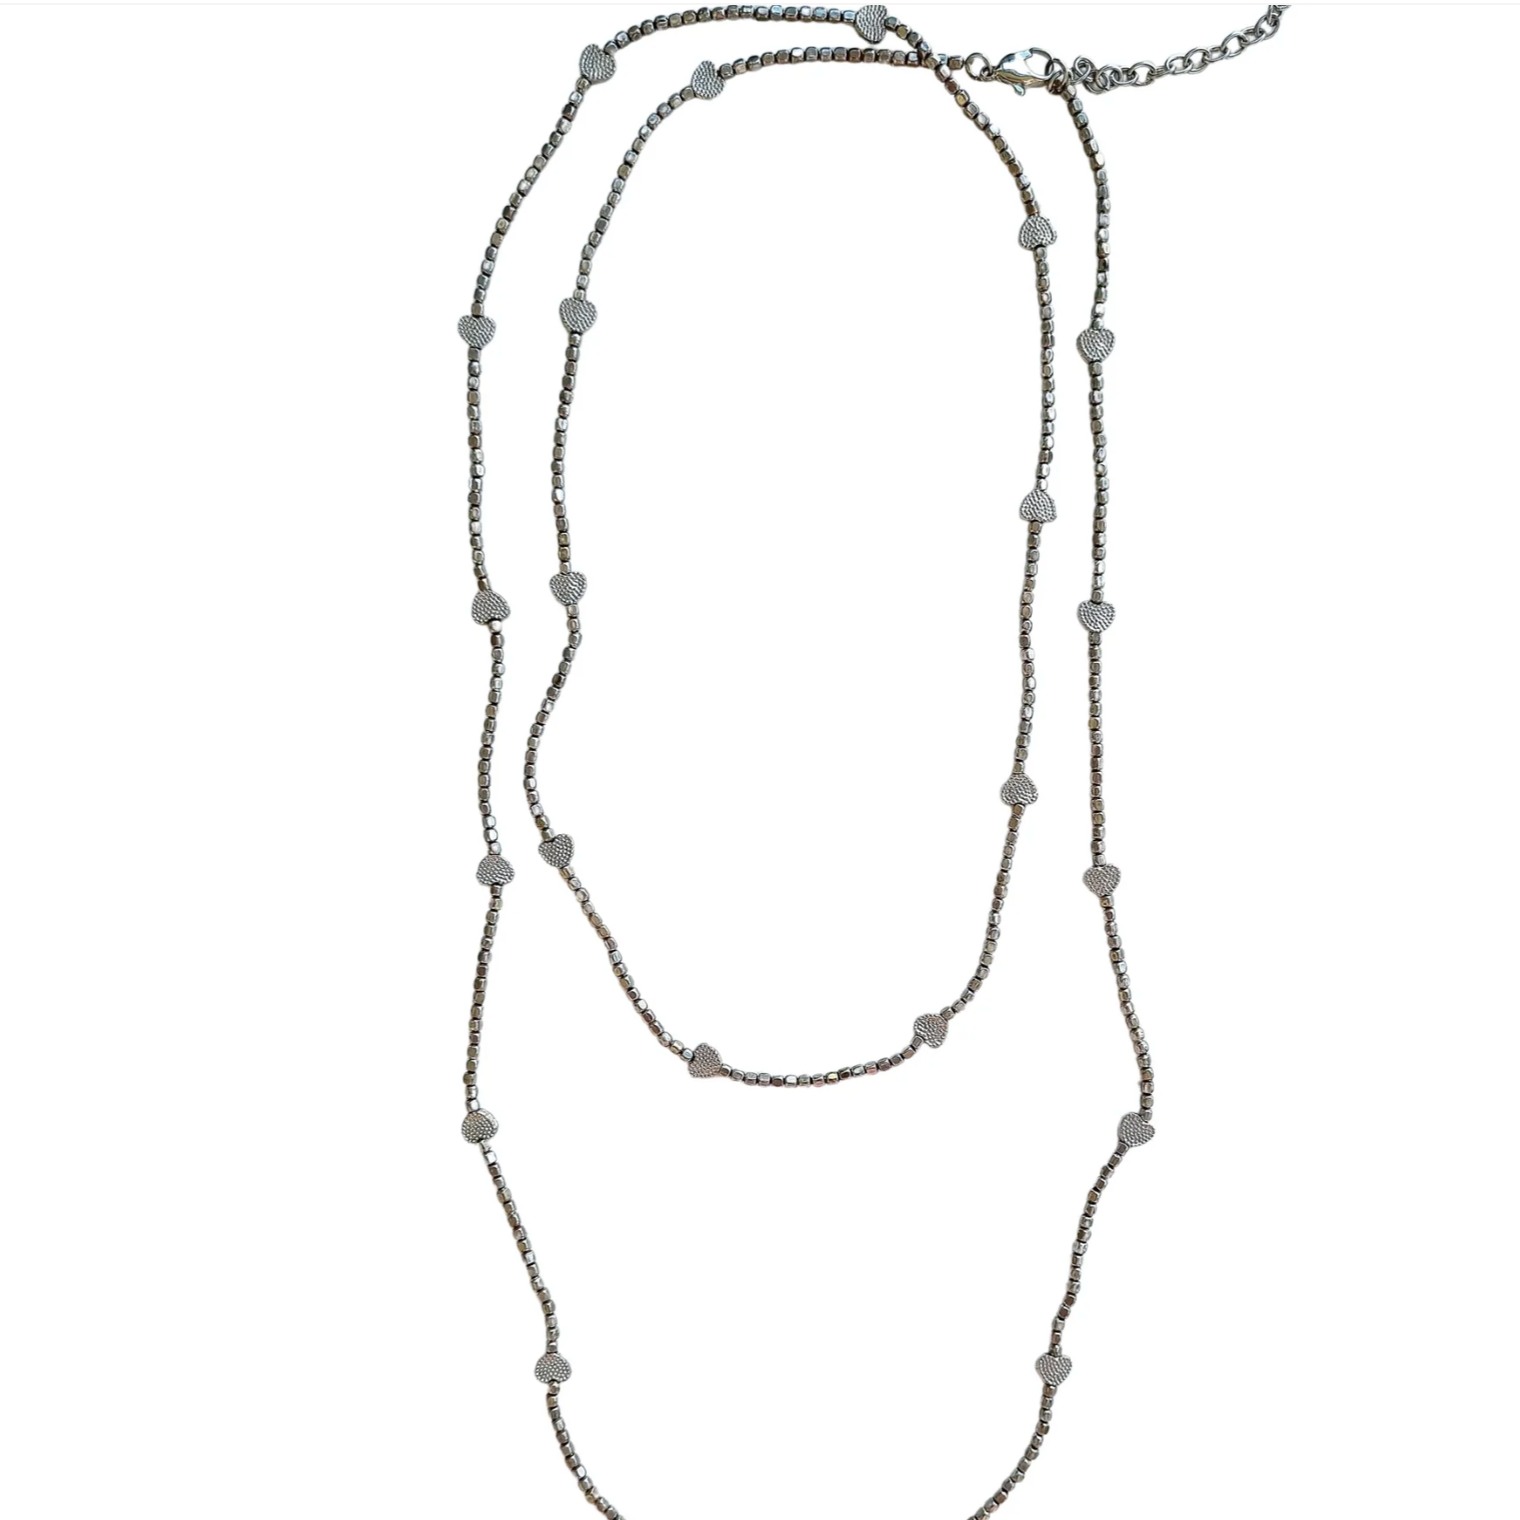 TM Silver-Tone Necklace